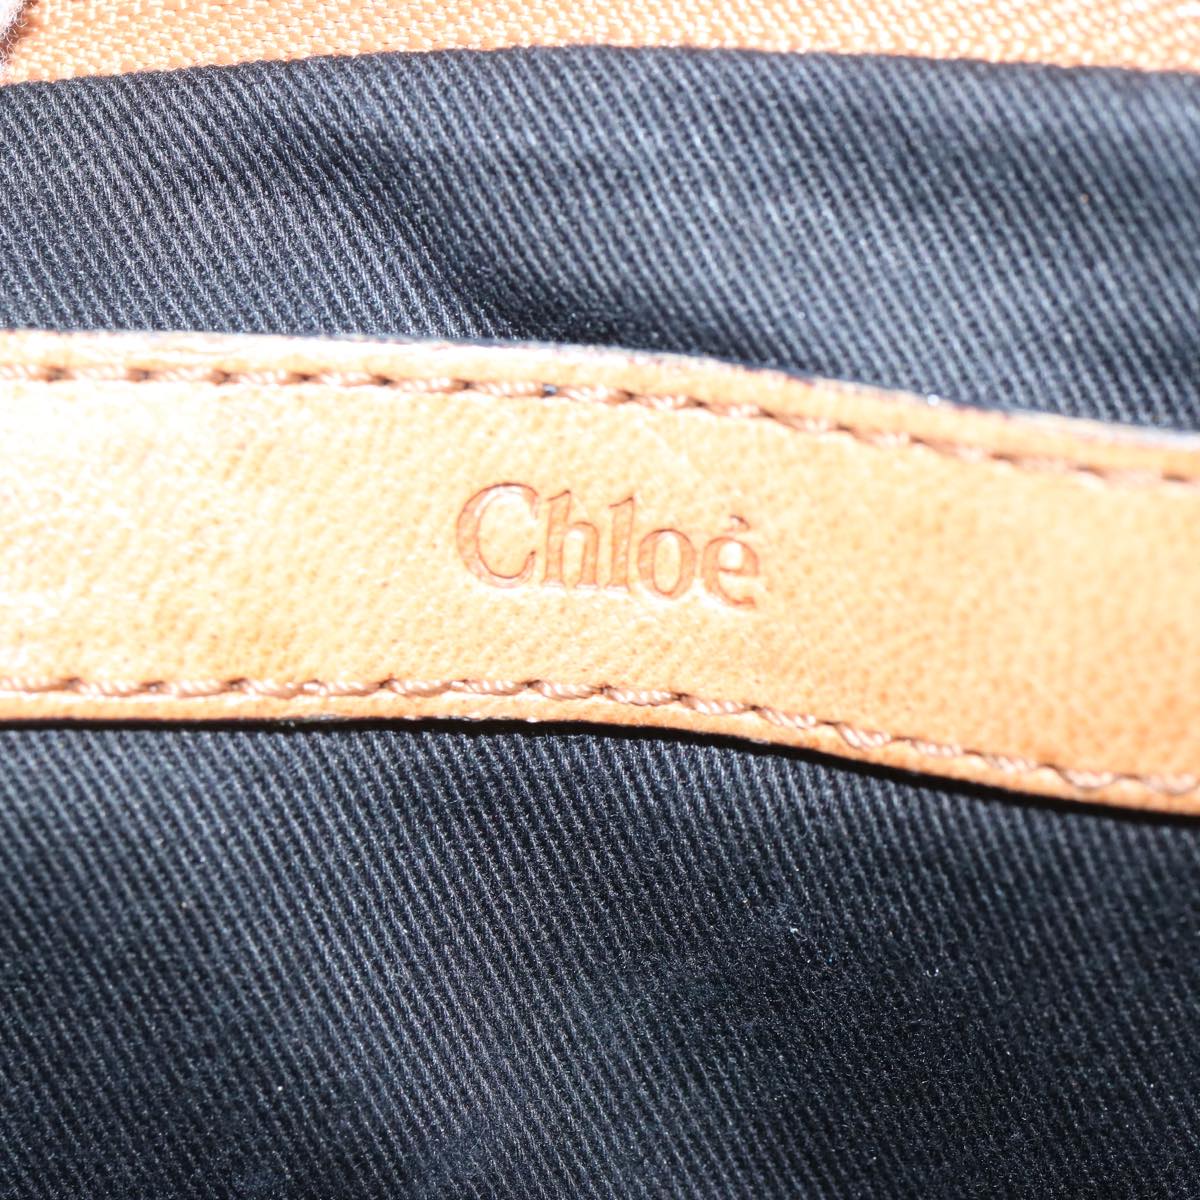 Chloe Etel Hand Bag Leather 2way Brown 01 11 50 Auth yk10588